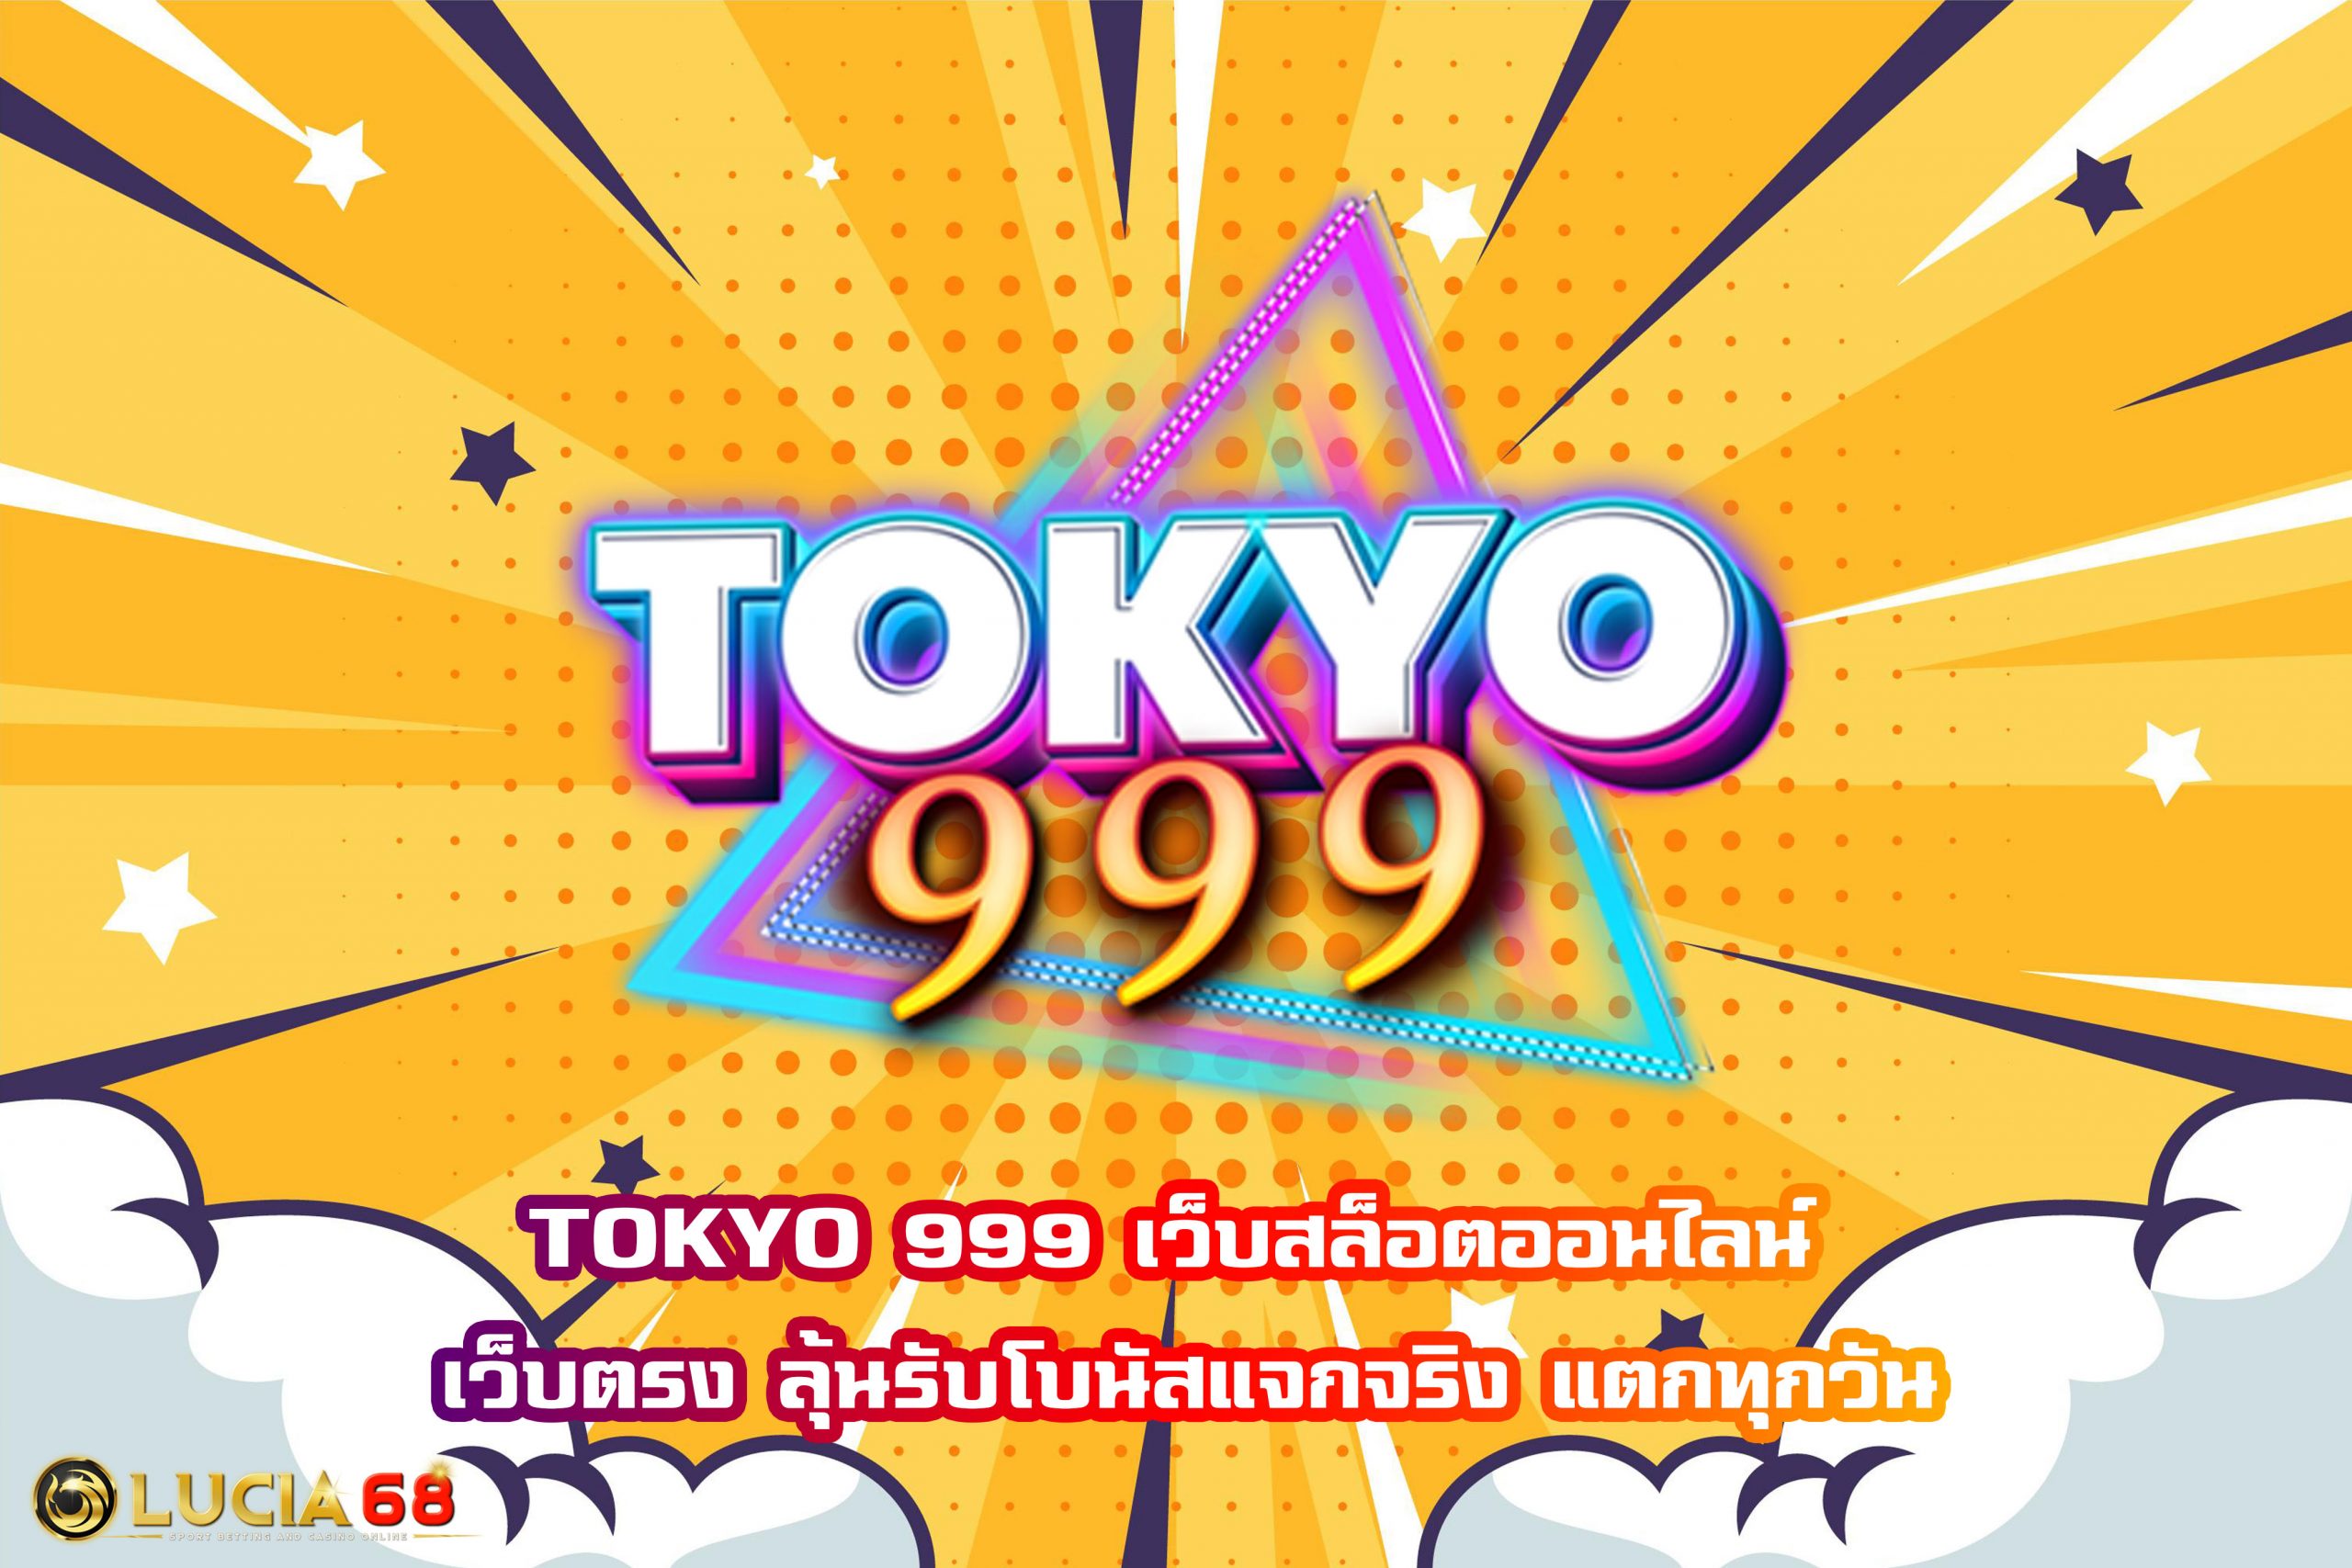 TOKYO 999 เว็บสล็อตออนไลน์ เว็บตรง ลุ้นรับโบนัสแจกจริง แตกทุกวัน